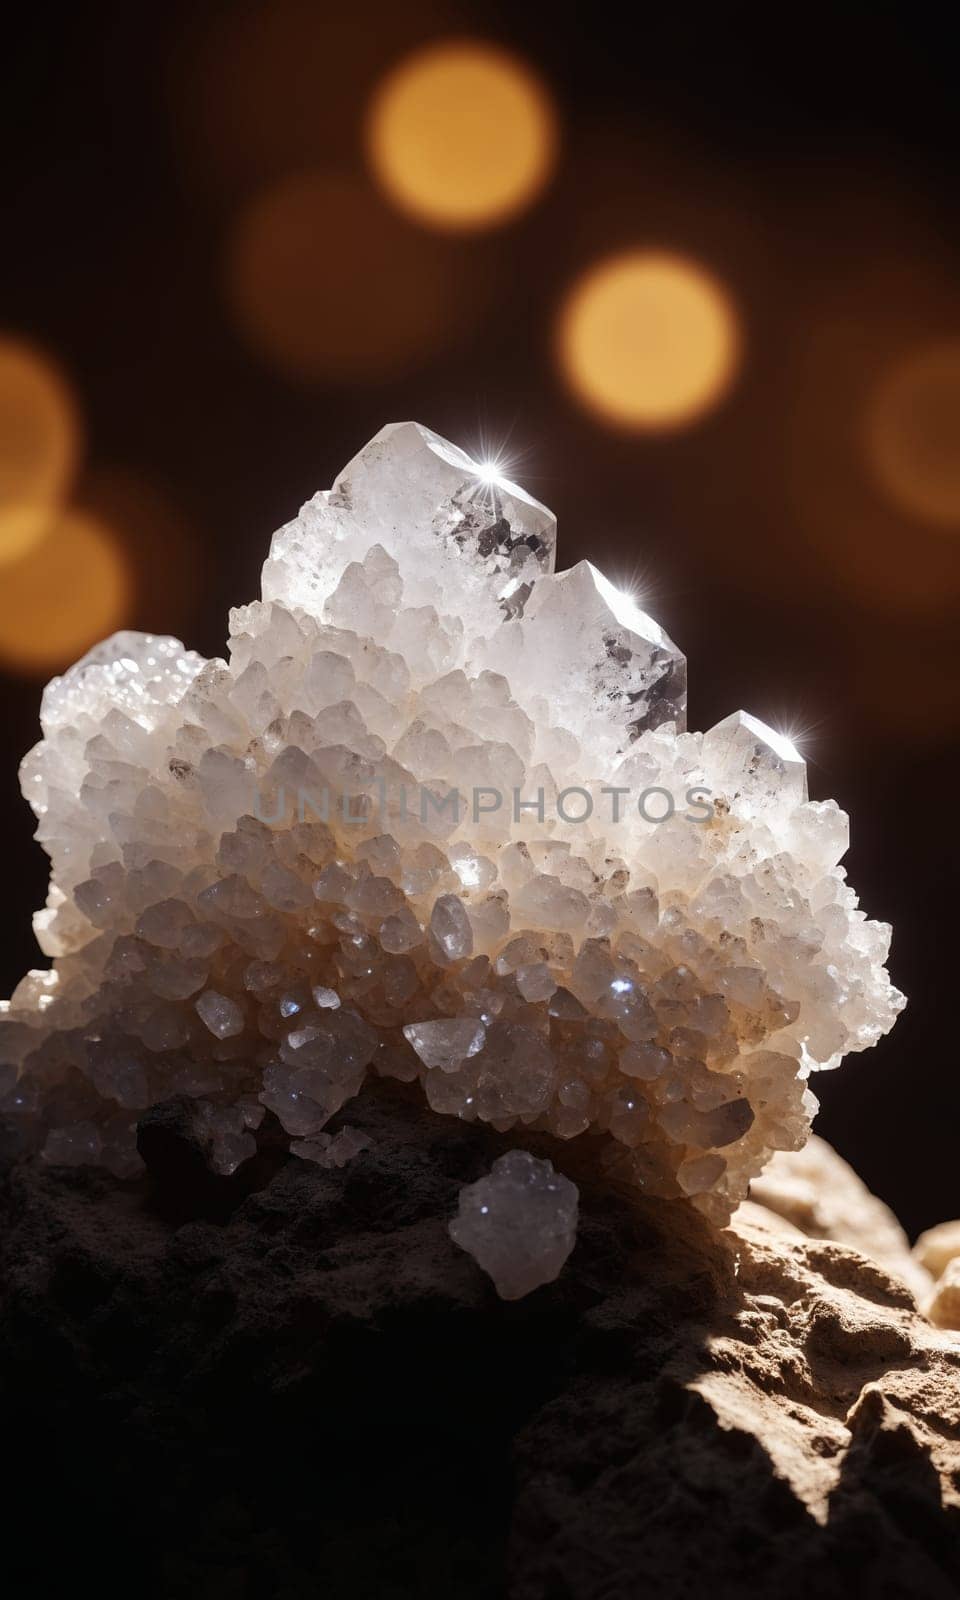 Macro image of crystal quartz on black background with bokeh.